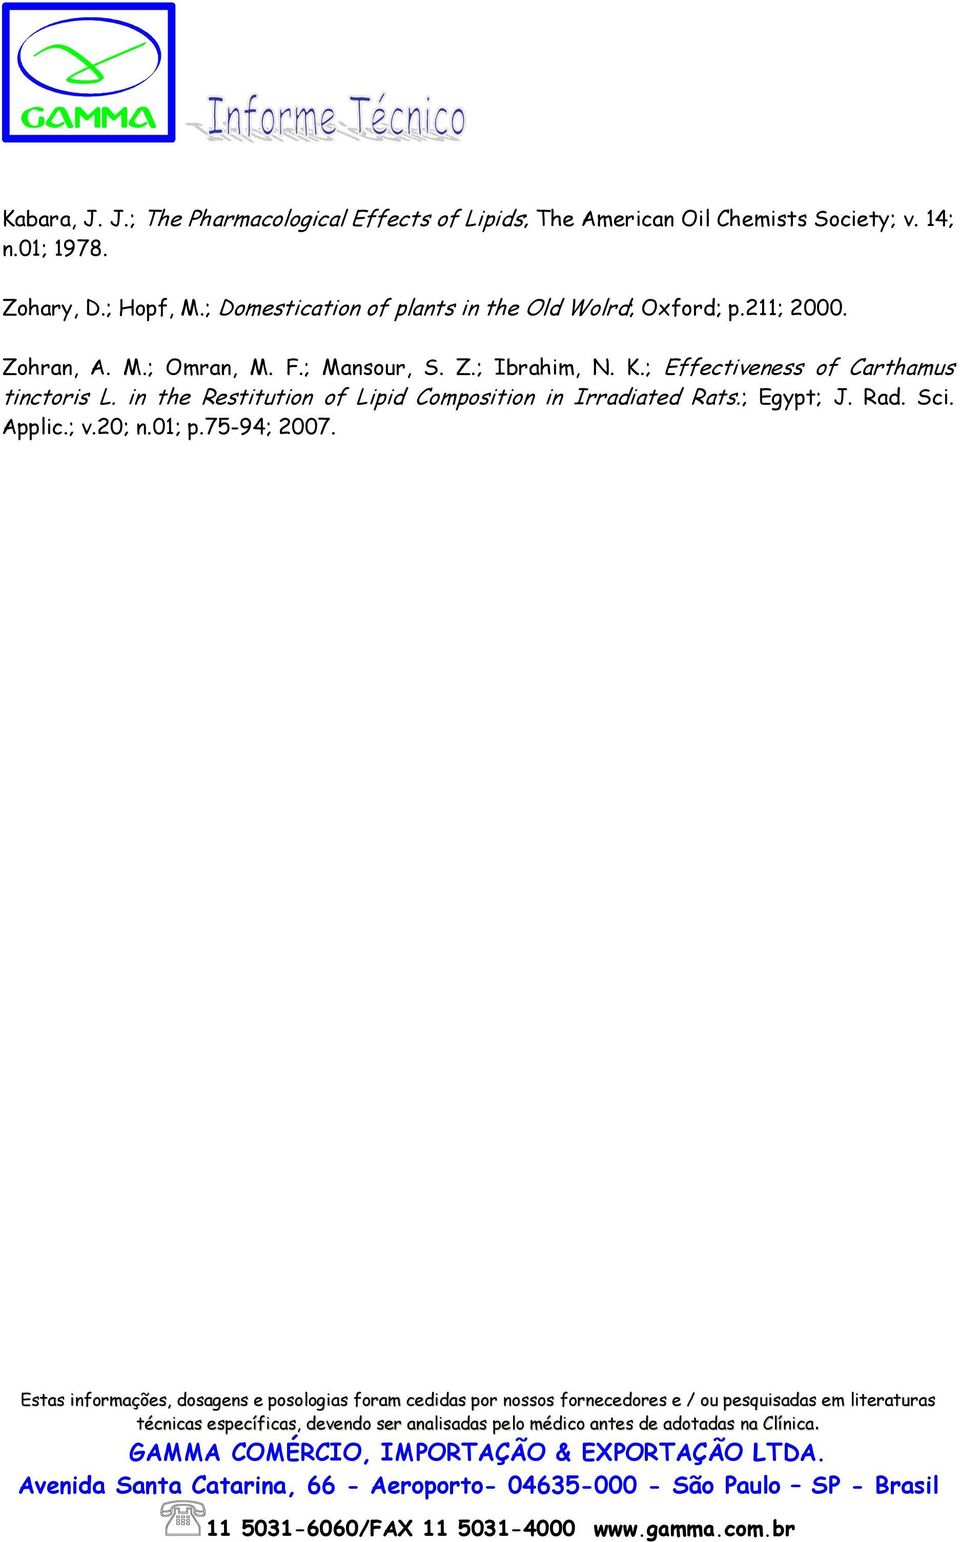 Zohran, A. M.; Omran, M. F.; Mansour, S. Z.; Ibrahim, N. K.; Effectiveness of Carthamus tinctoris L.